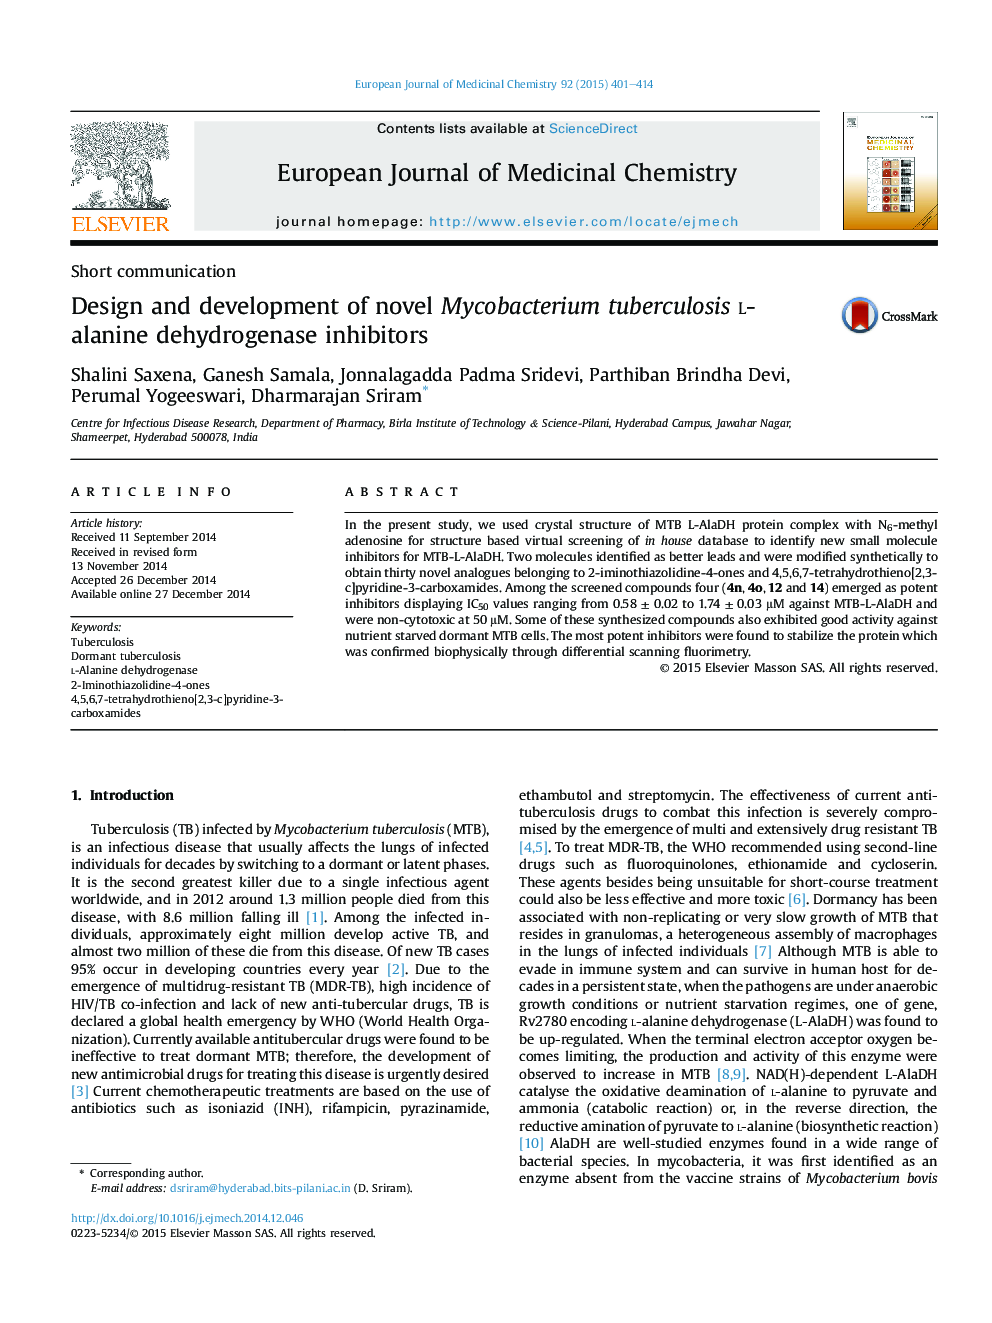 Design and development of novel Mycobacterium tuberculosisl-alanine dehydrogenase inhibitors